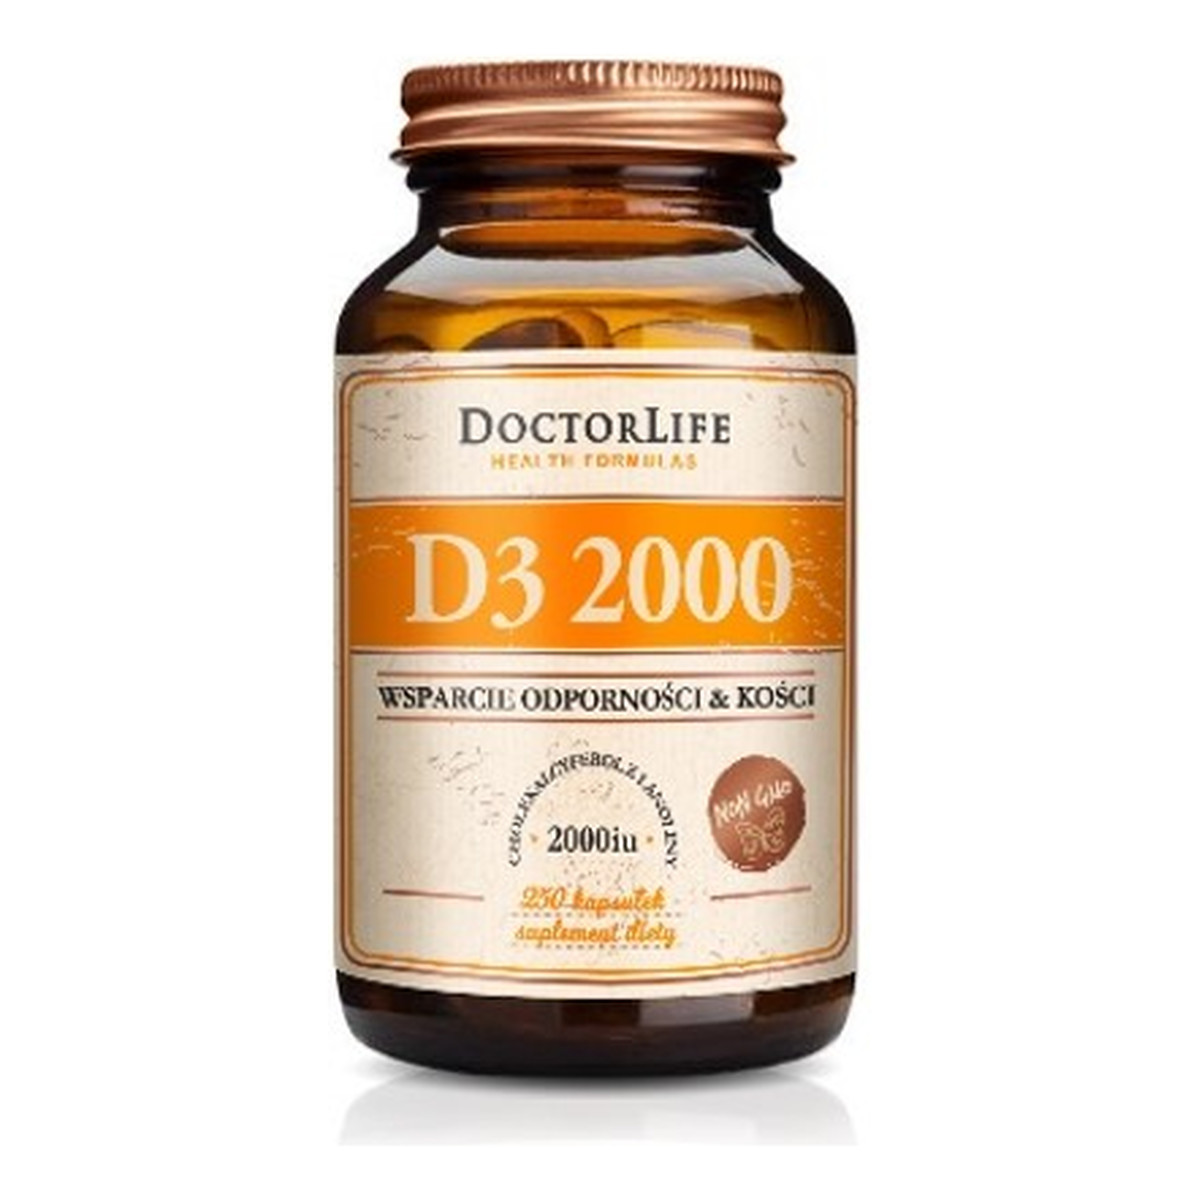 Doctor Life D3 2000 z lanoliny w oliwie z oliwek suplement diety 250 kapsułek